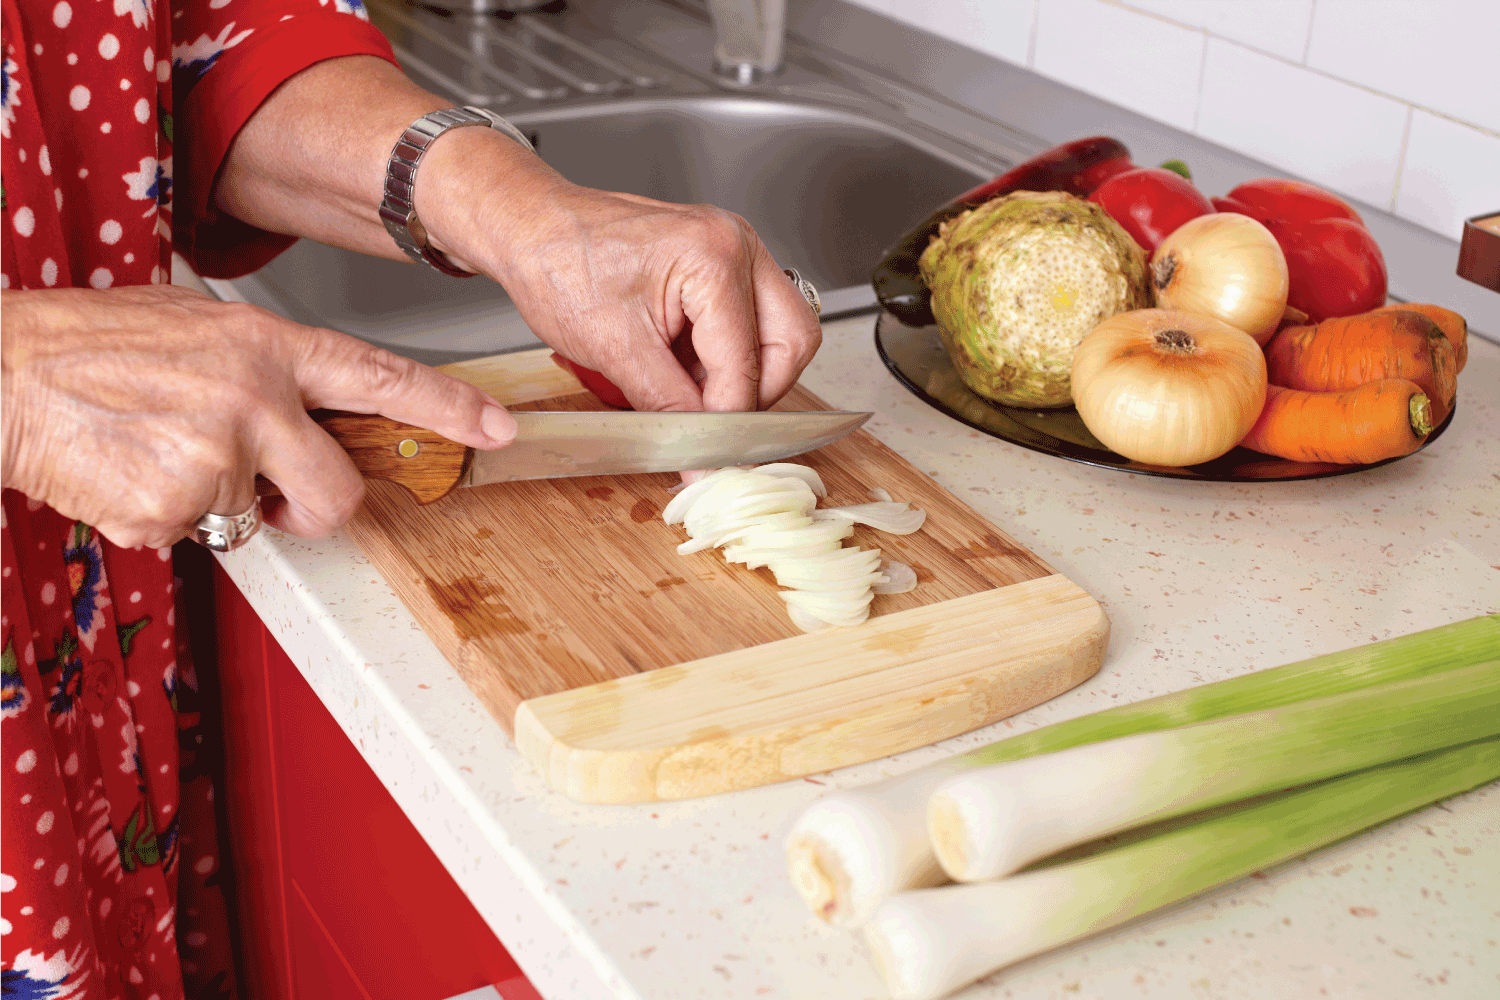 Senior woman's hands cutting vegetables